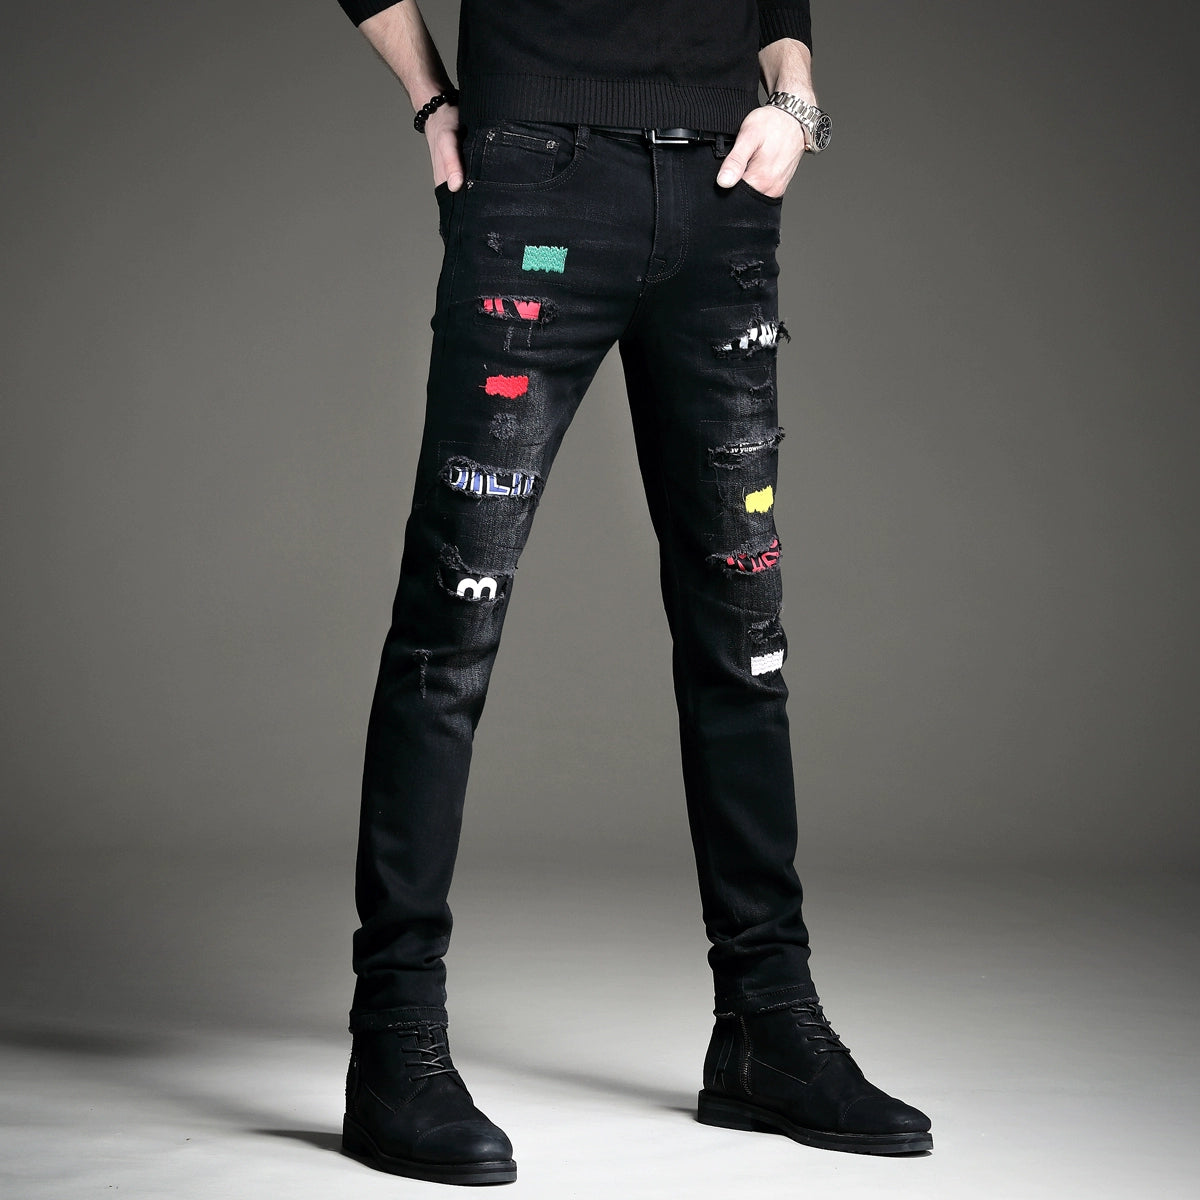 Men's Black Slim-Fit Ripped Jeans for Summer